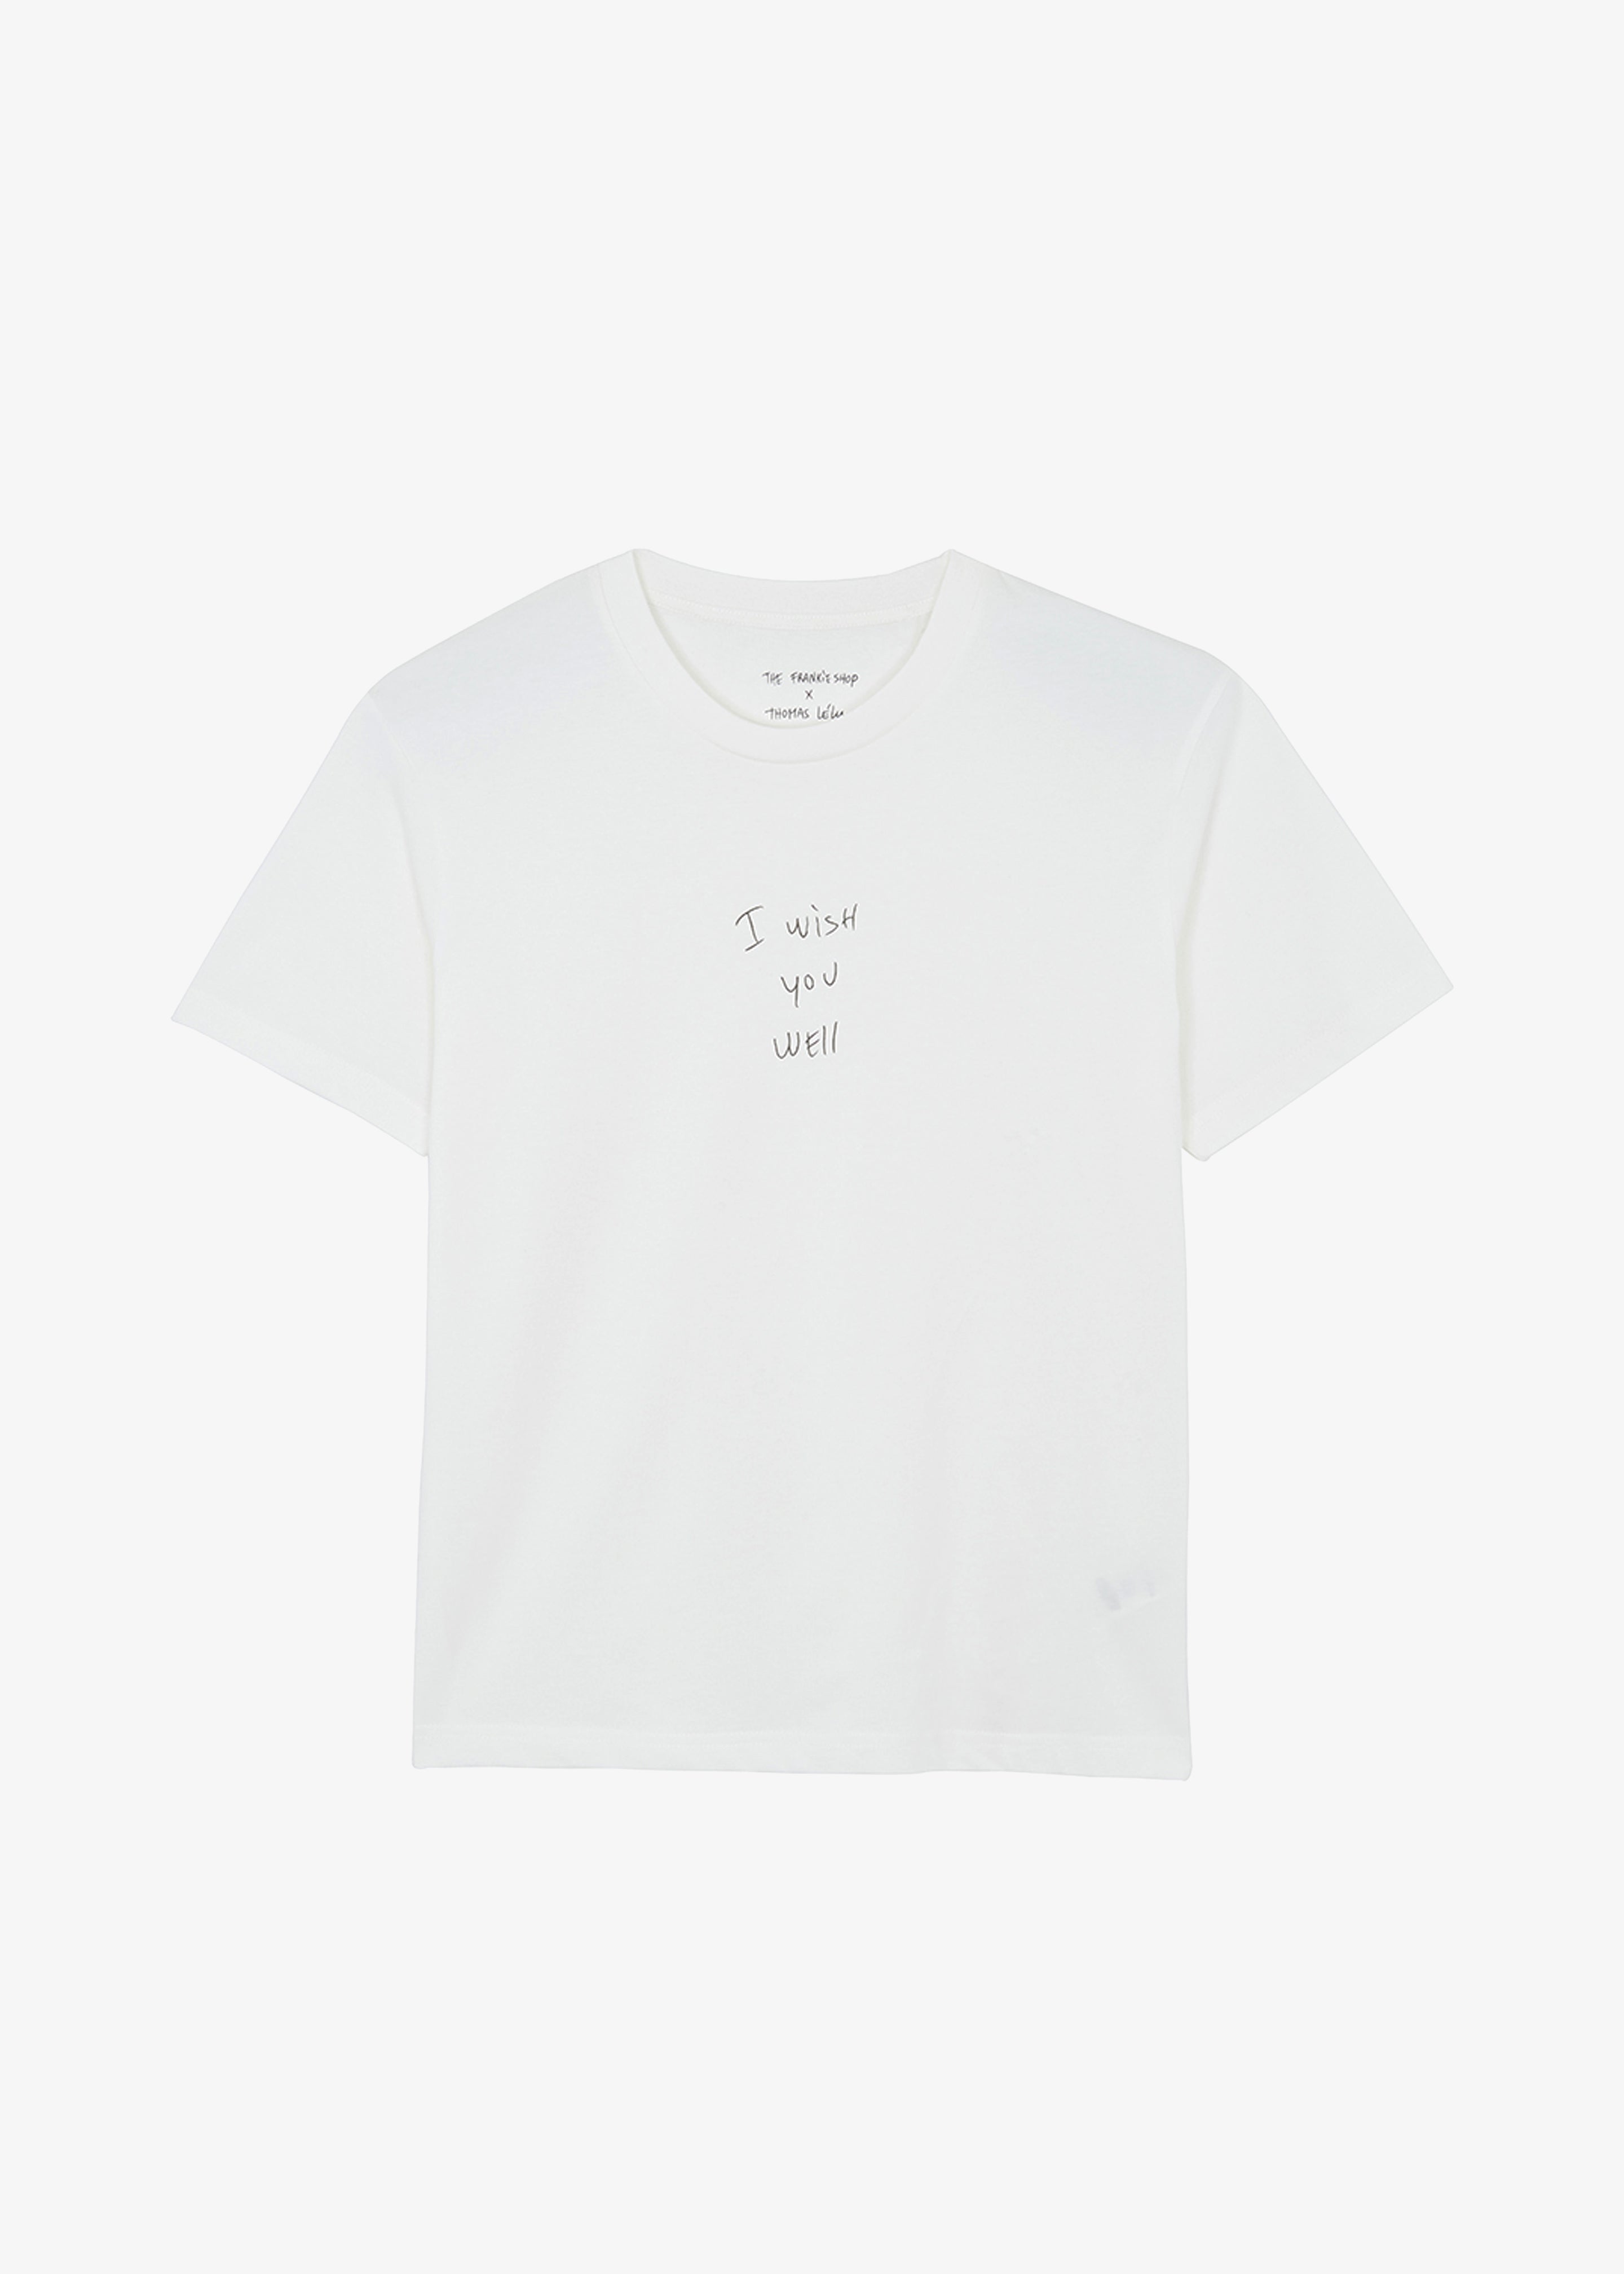 The Frankie Shop x Thomas Lélu Slope T-Shirt - Off White/Black - 11